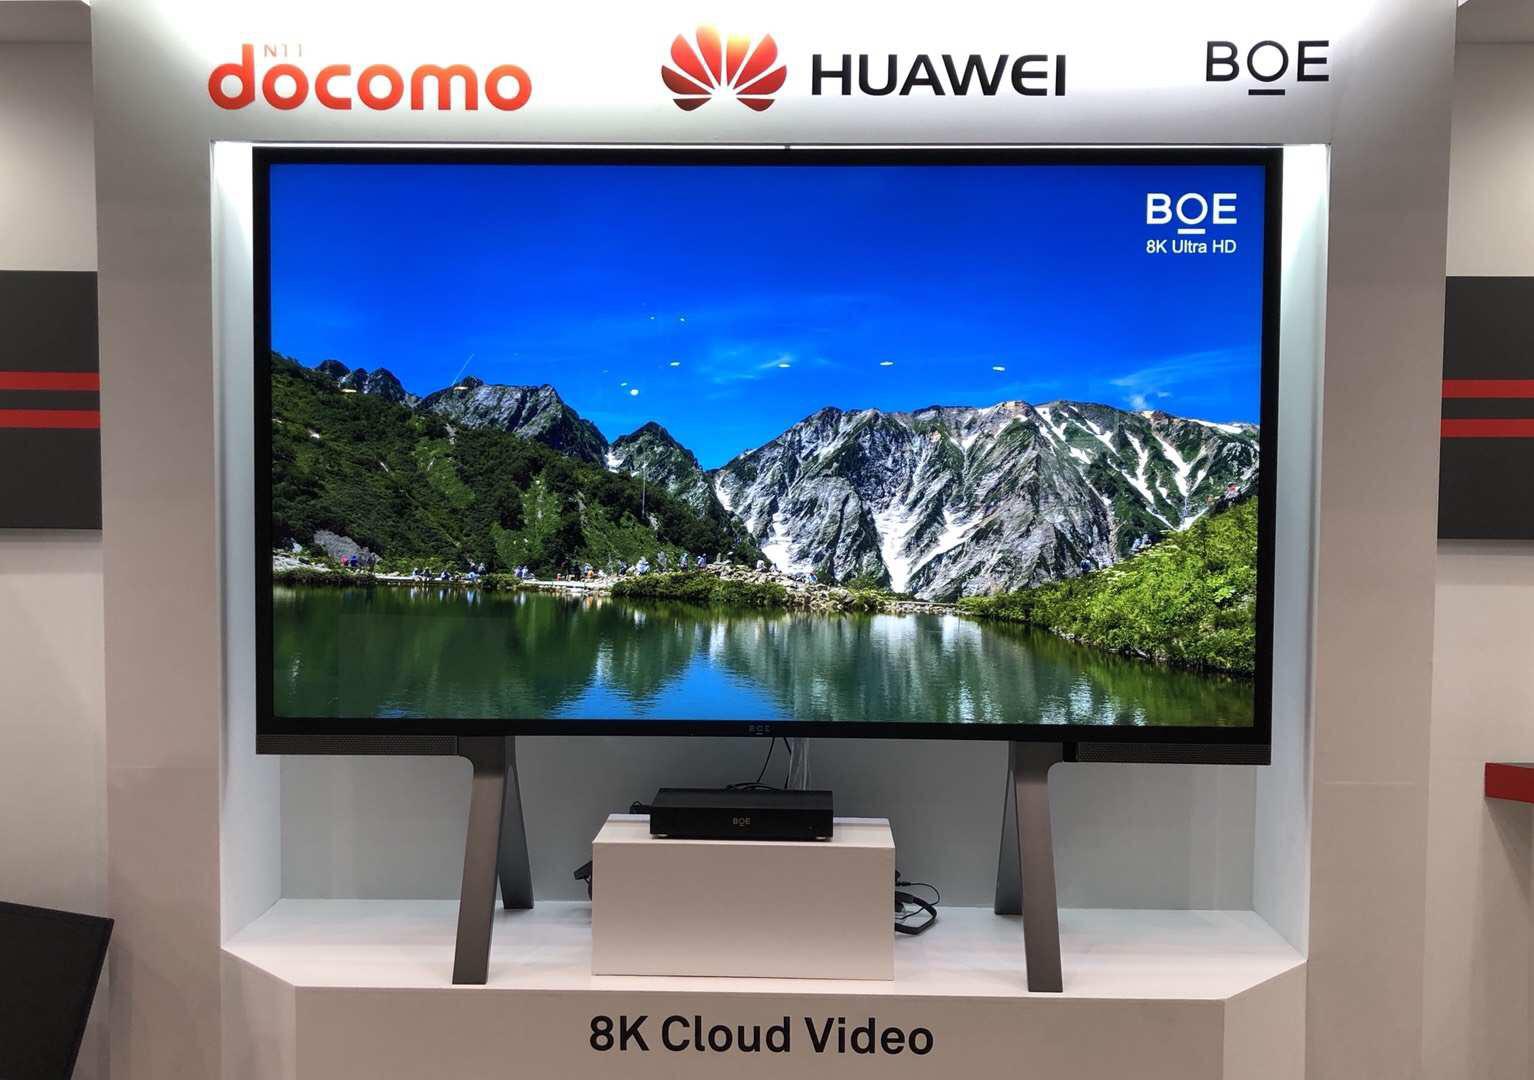 BOE（京东方）实现全球首次“8K+5G”直播